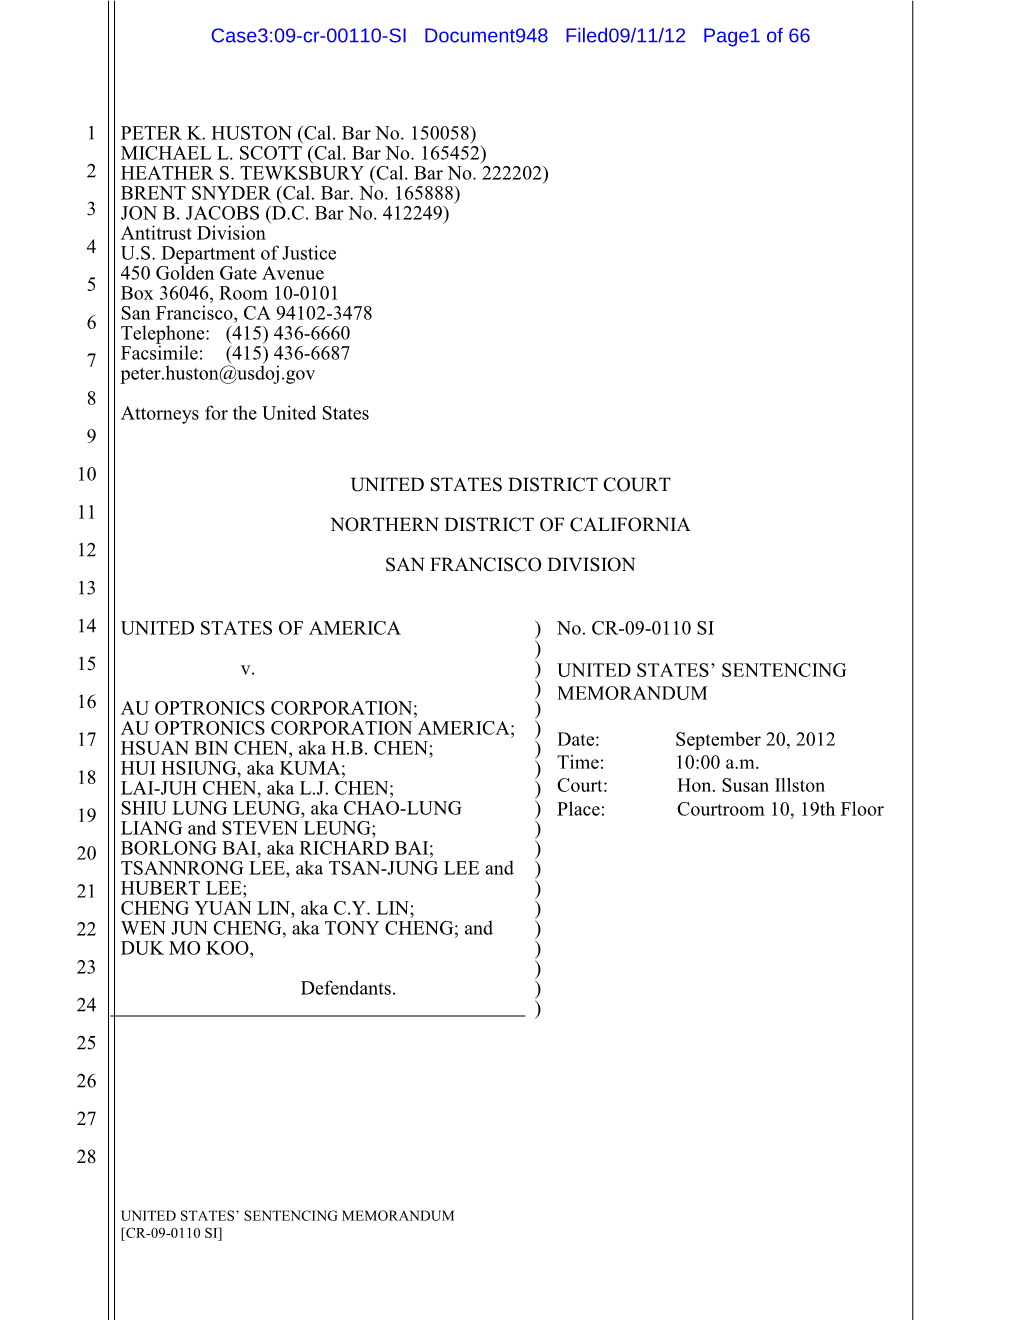 United States Sentencing Memorandum: U.S. V. AU Optronics Corporation, Et